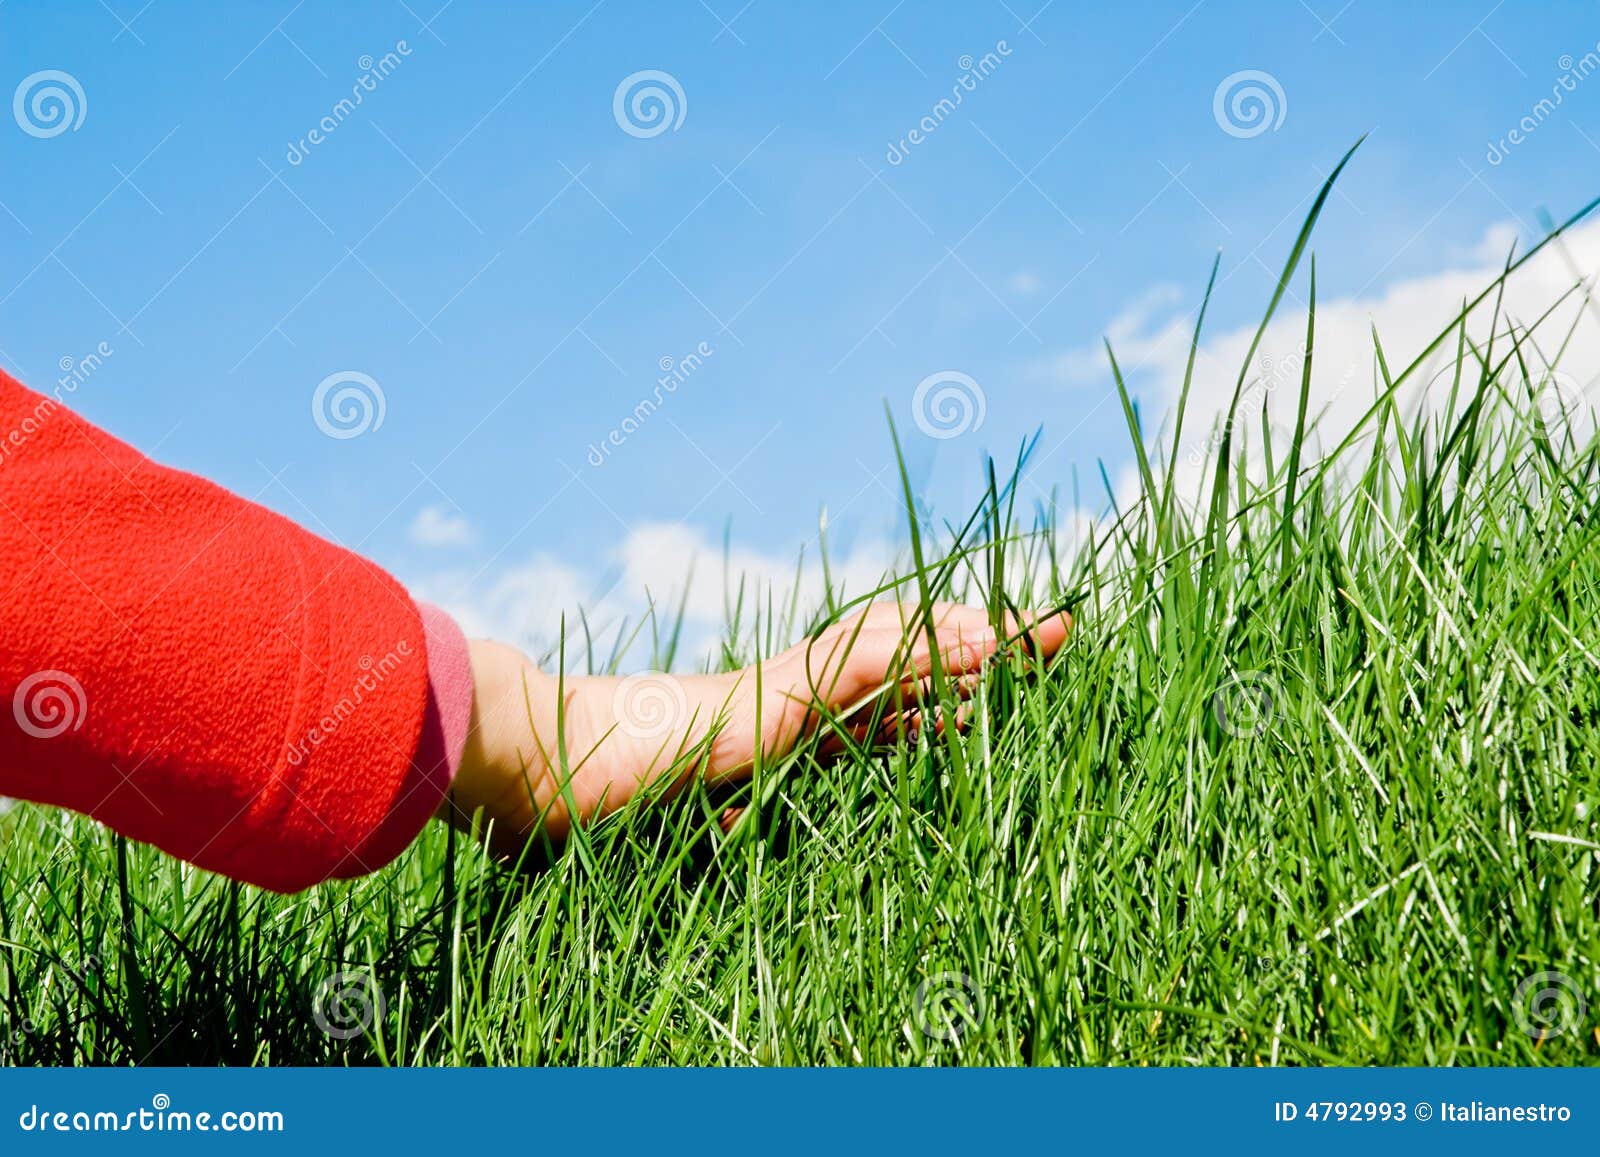 caressing the grass